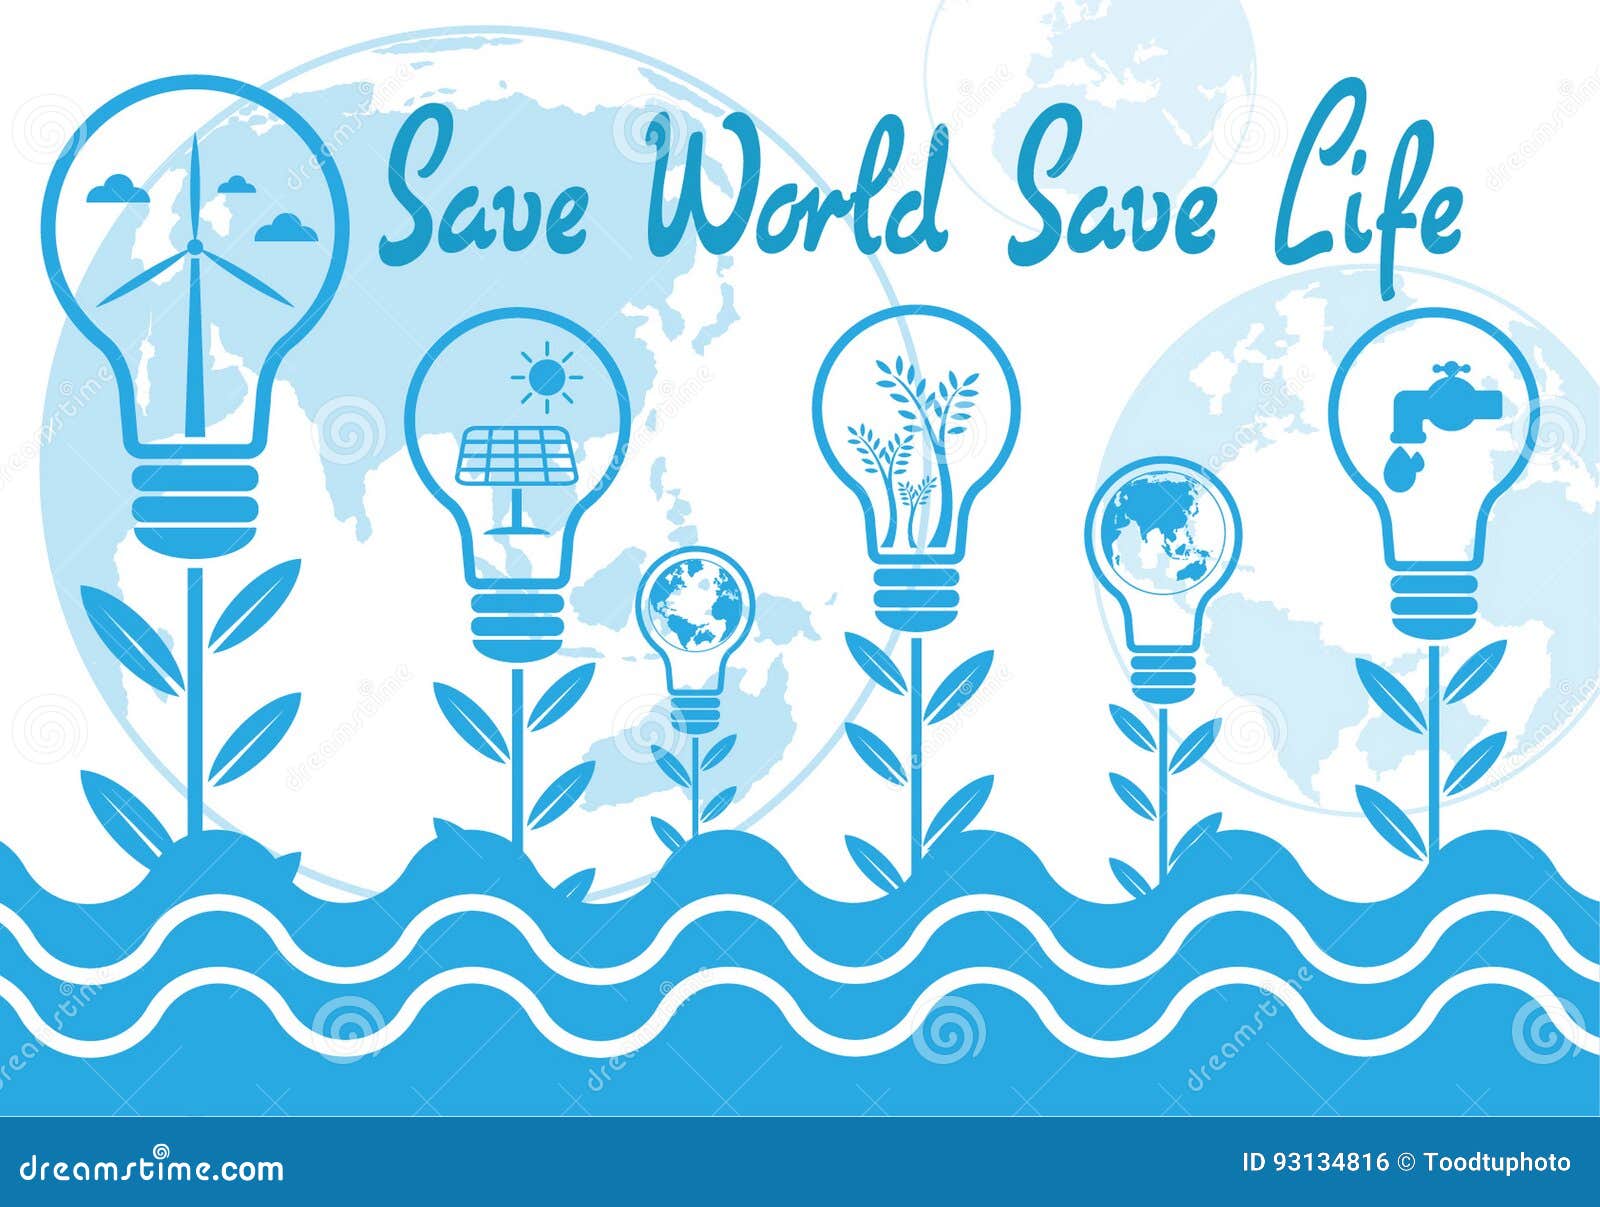 Save this world. Табличка save the World.